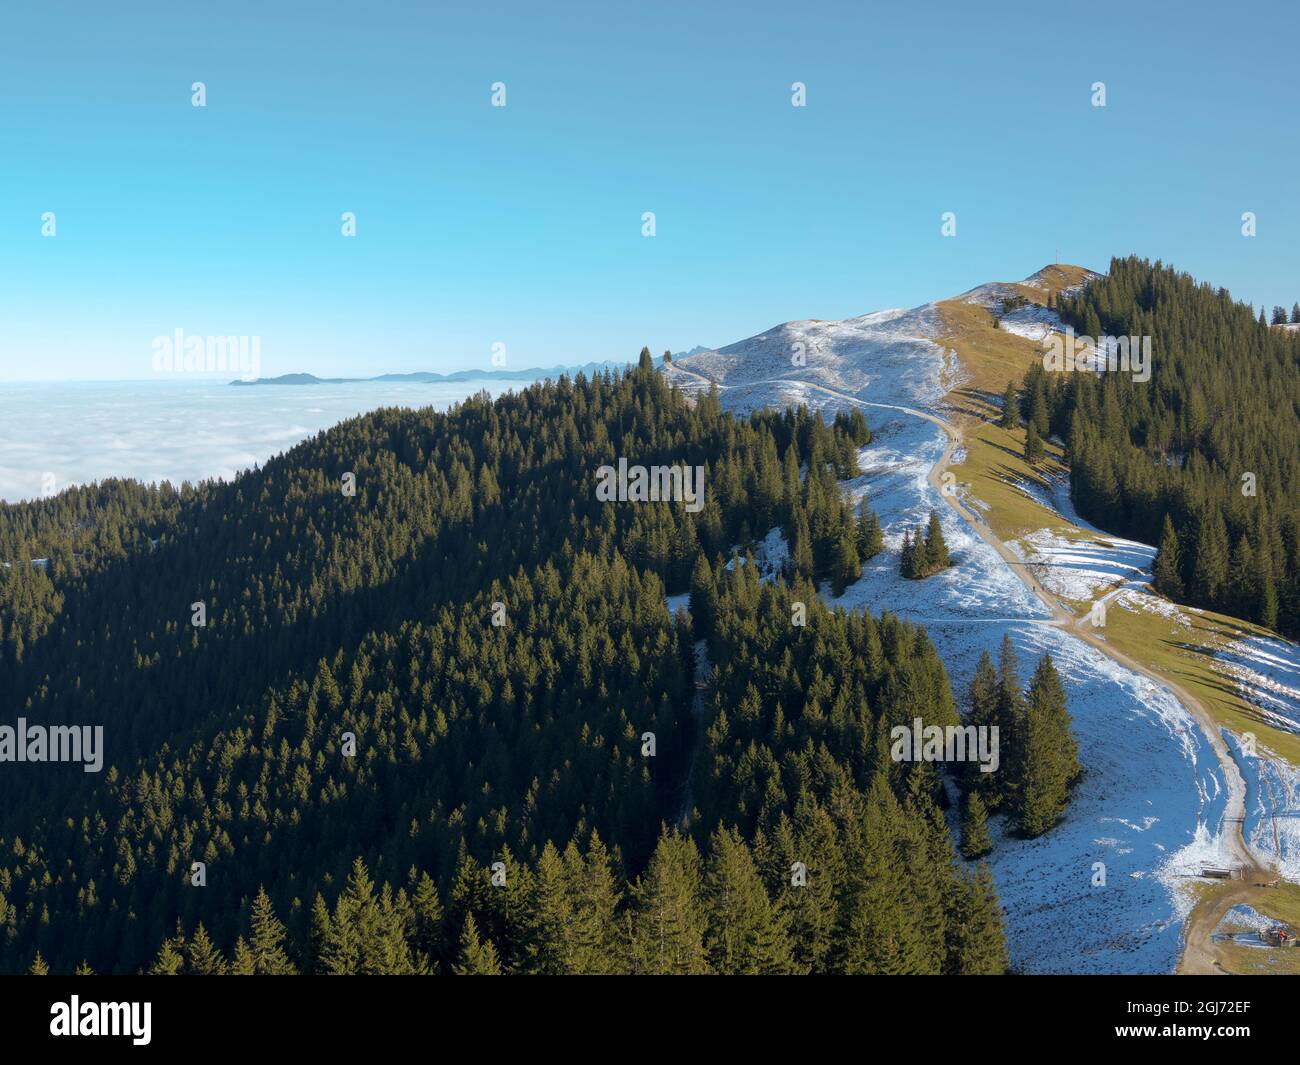 Mount Hinteres Hoernle. Bavarian alps near Unterammergau in the Werdenfelser Land (Werdenfels county). Europe, Germany, Bavaria Stock Photo